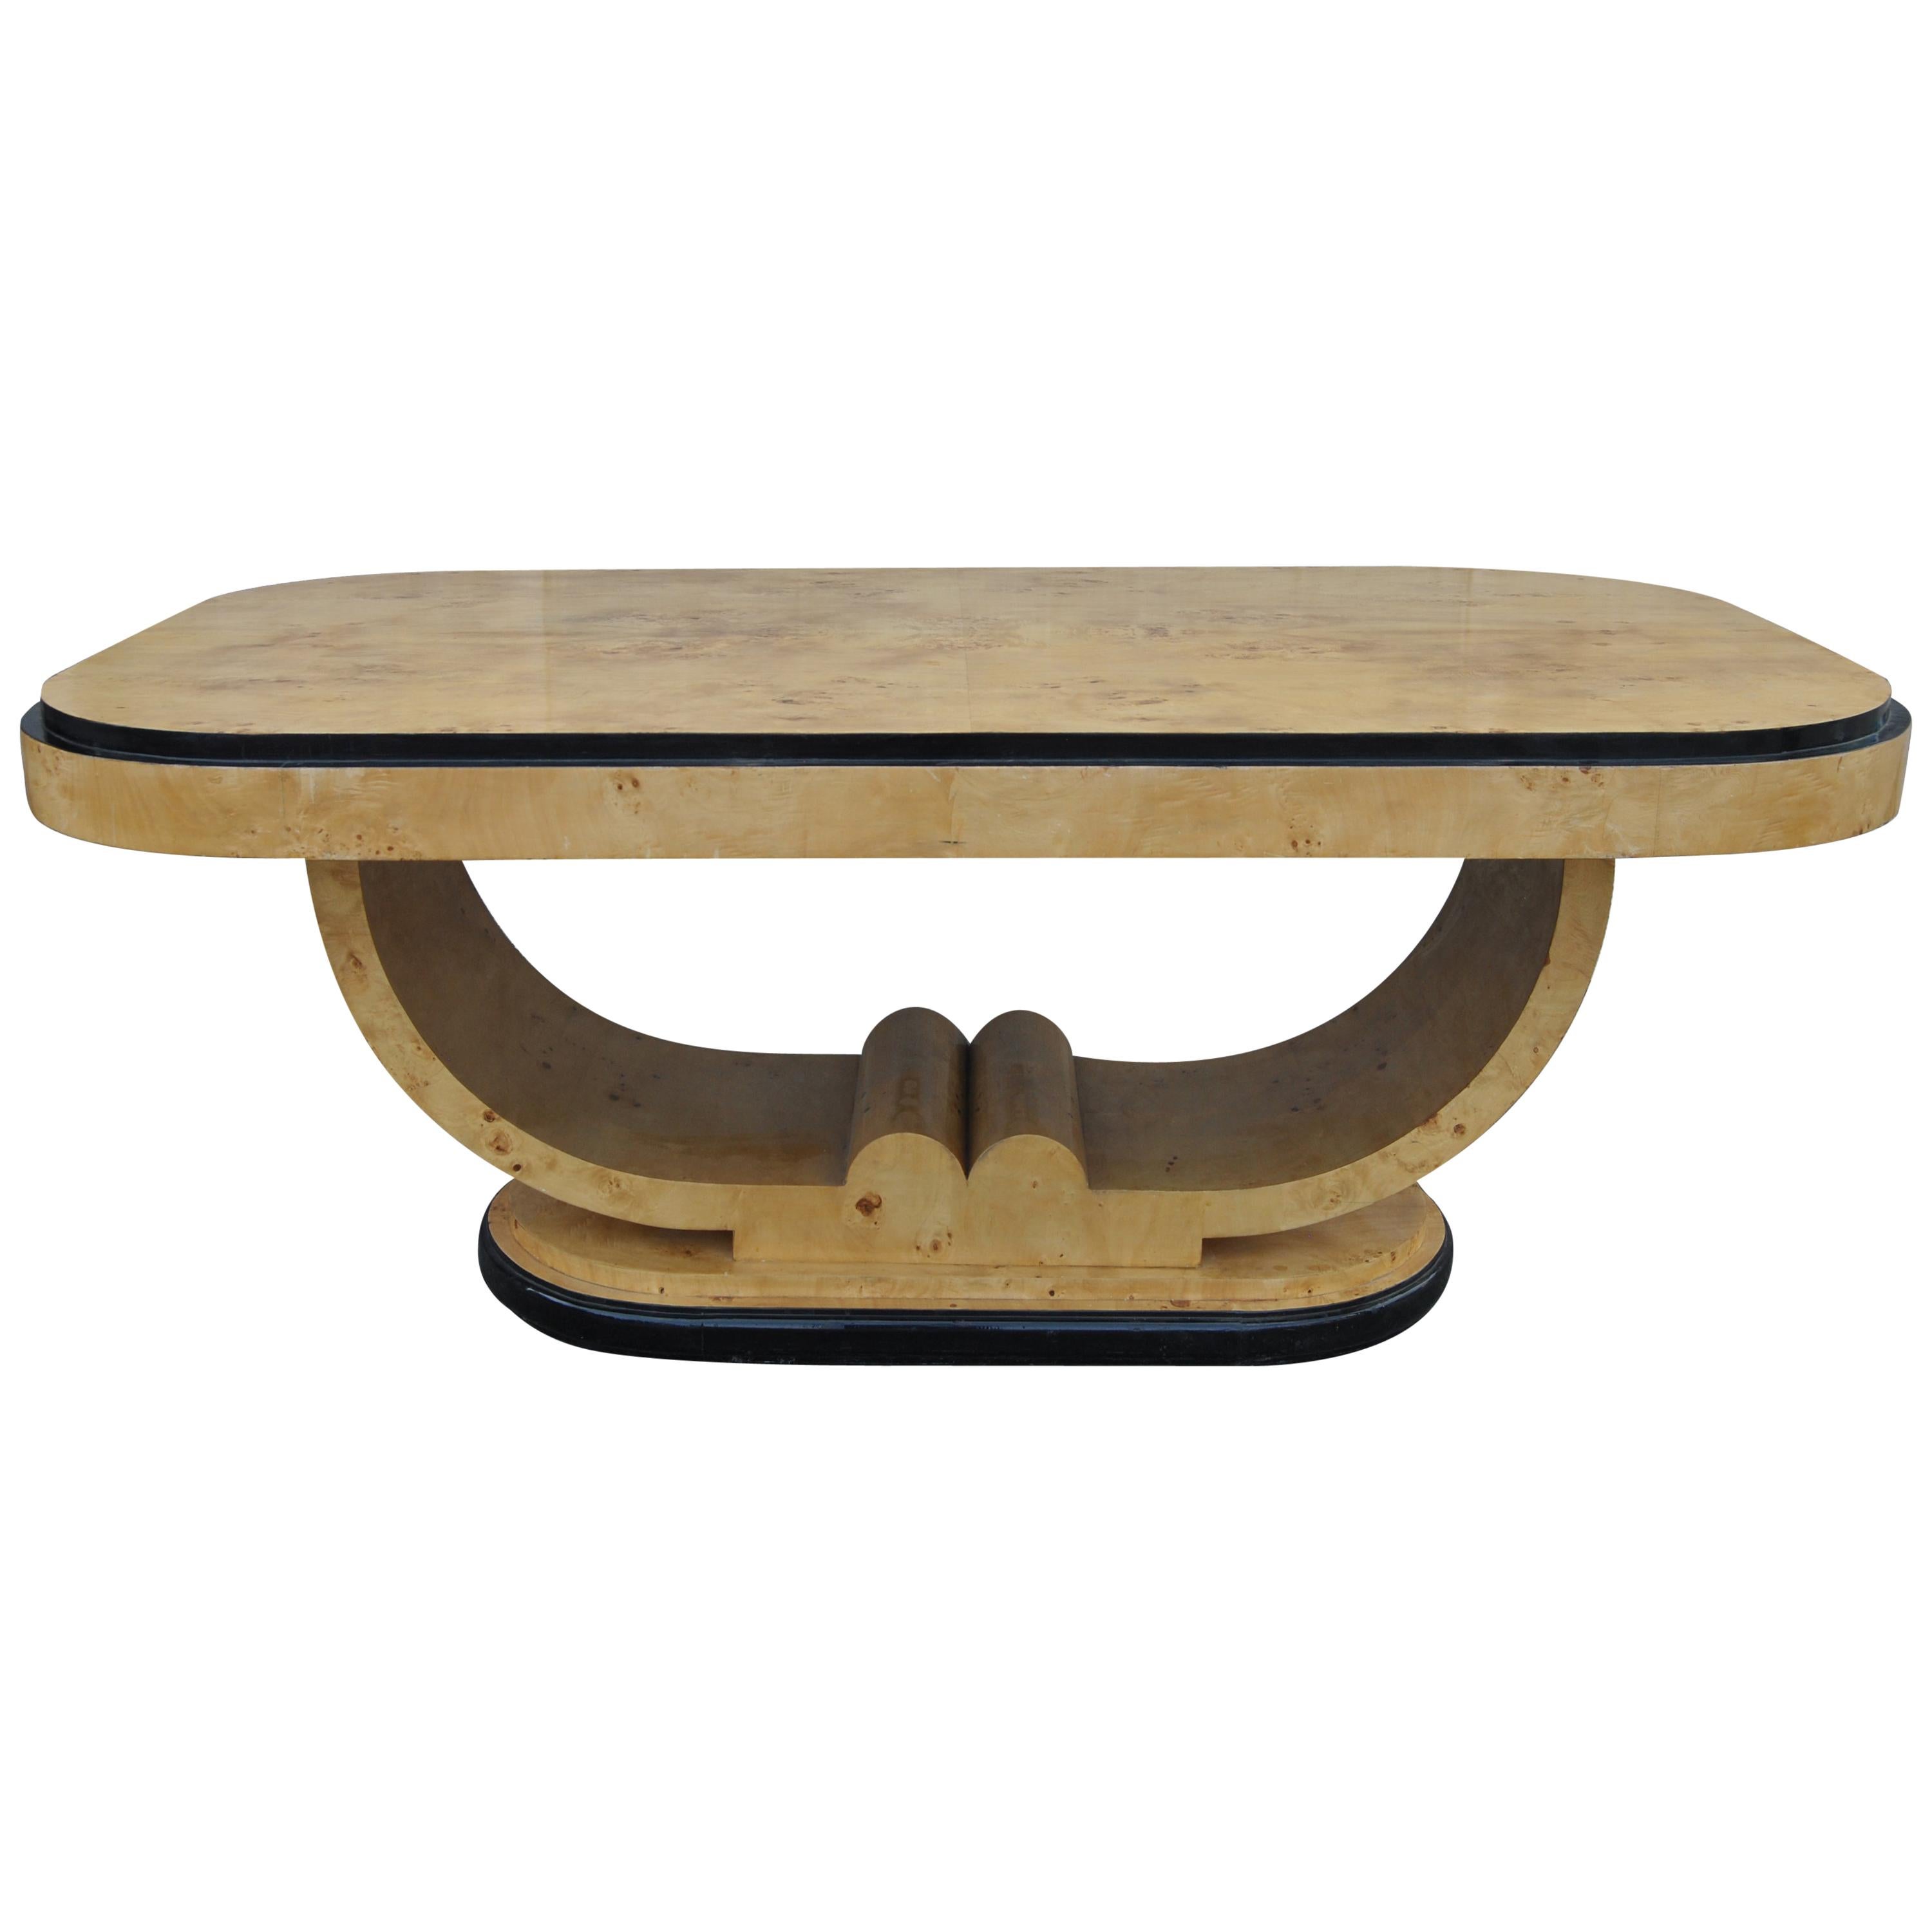 Vintage English Art Deco Style Bird's-Eye Maple Table